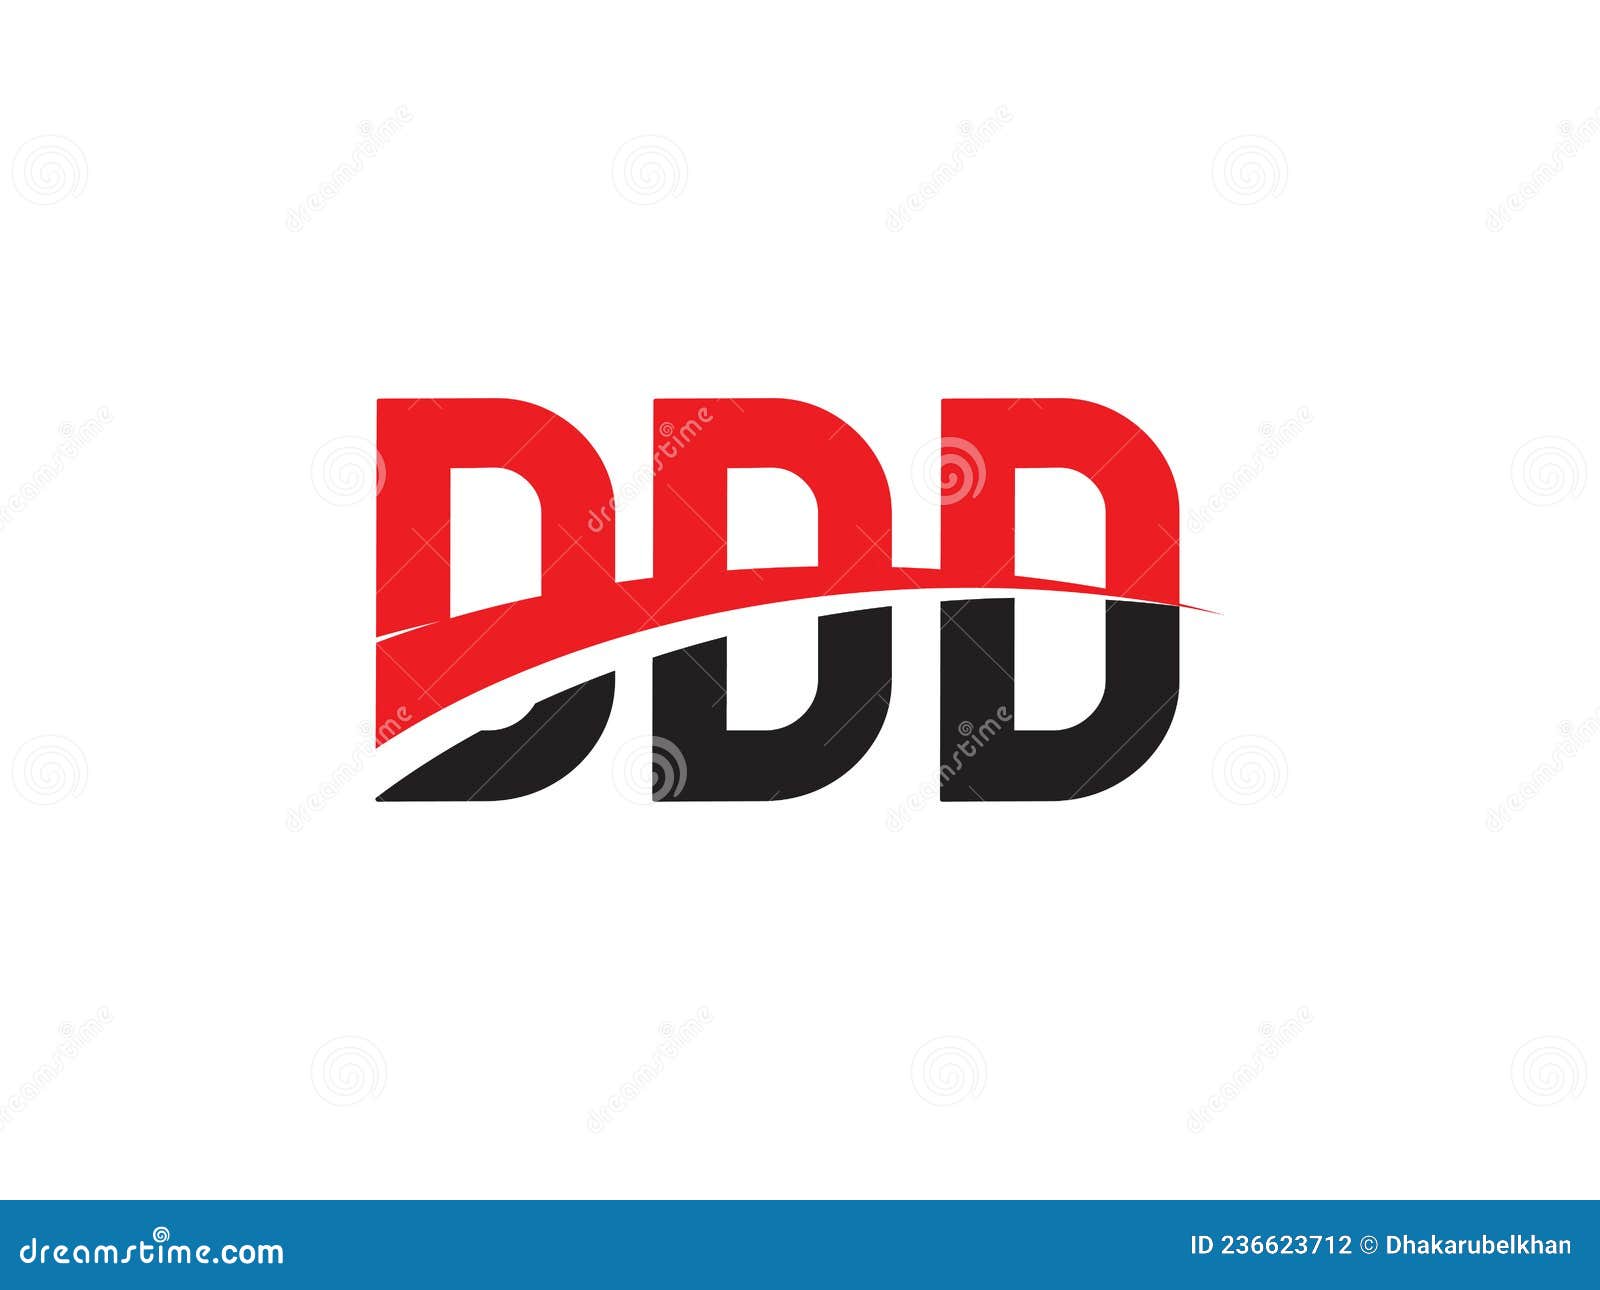 https://thumbs.dreamstime.com/z/ddd-letter-initial-logo-design-vector-illustration-letter-initial-logo-design-vector-illustration-ddd-letter-initial-logo-design-236623712.jpg